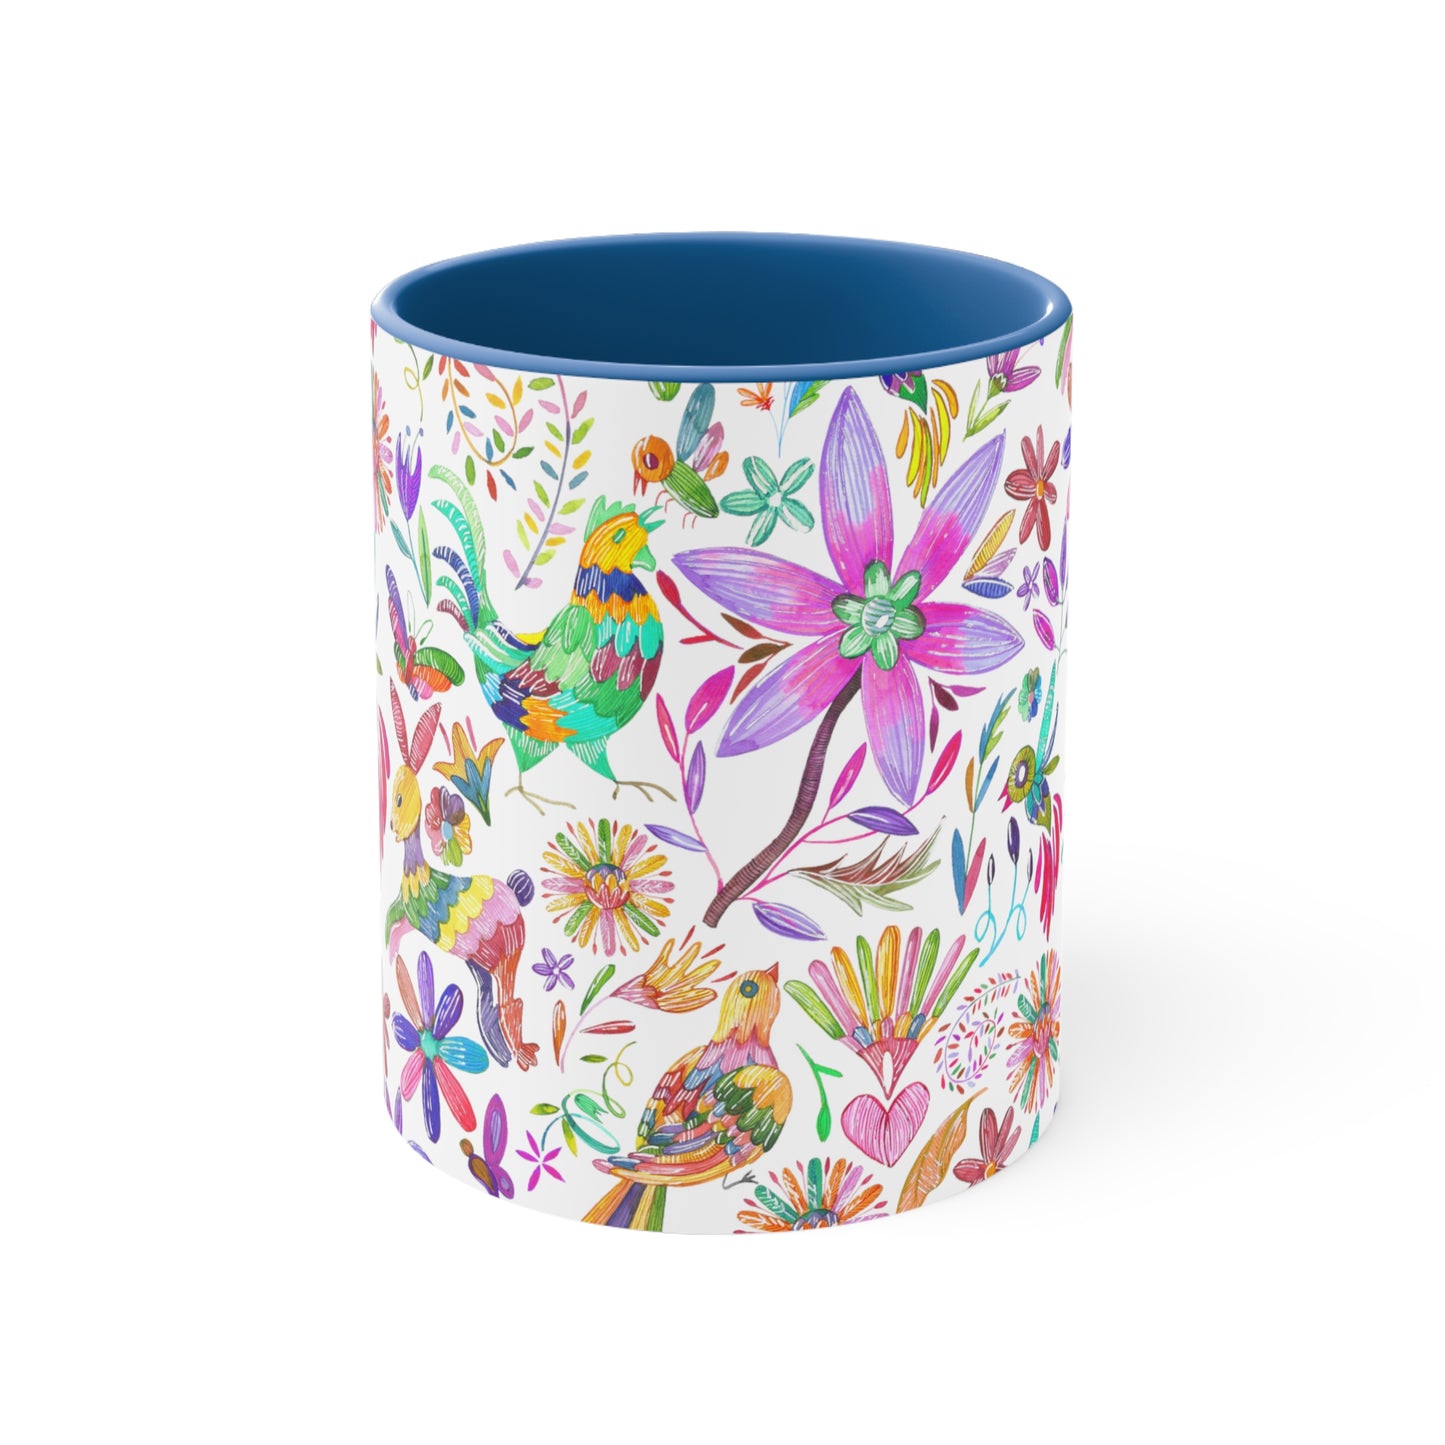 Colorful Otomi Coffee Mug, 11oz with animals and plants for mom or friends. Mexican folk art mug. Mexican ceramic coffee mug